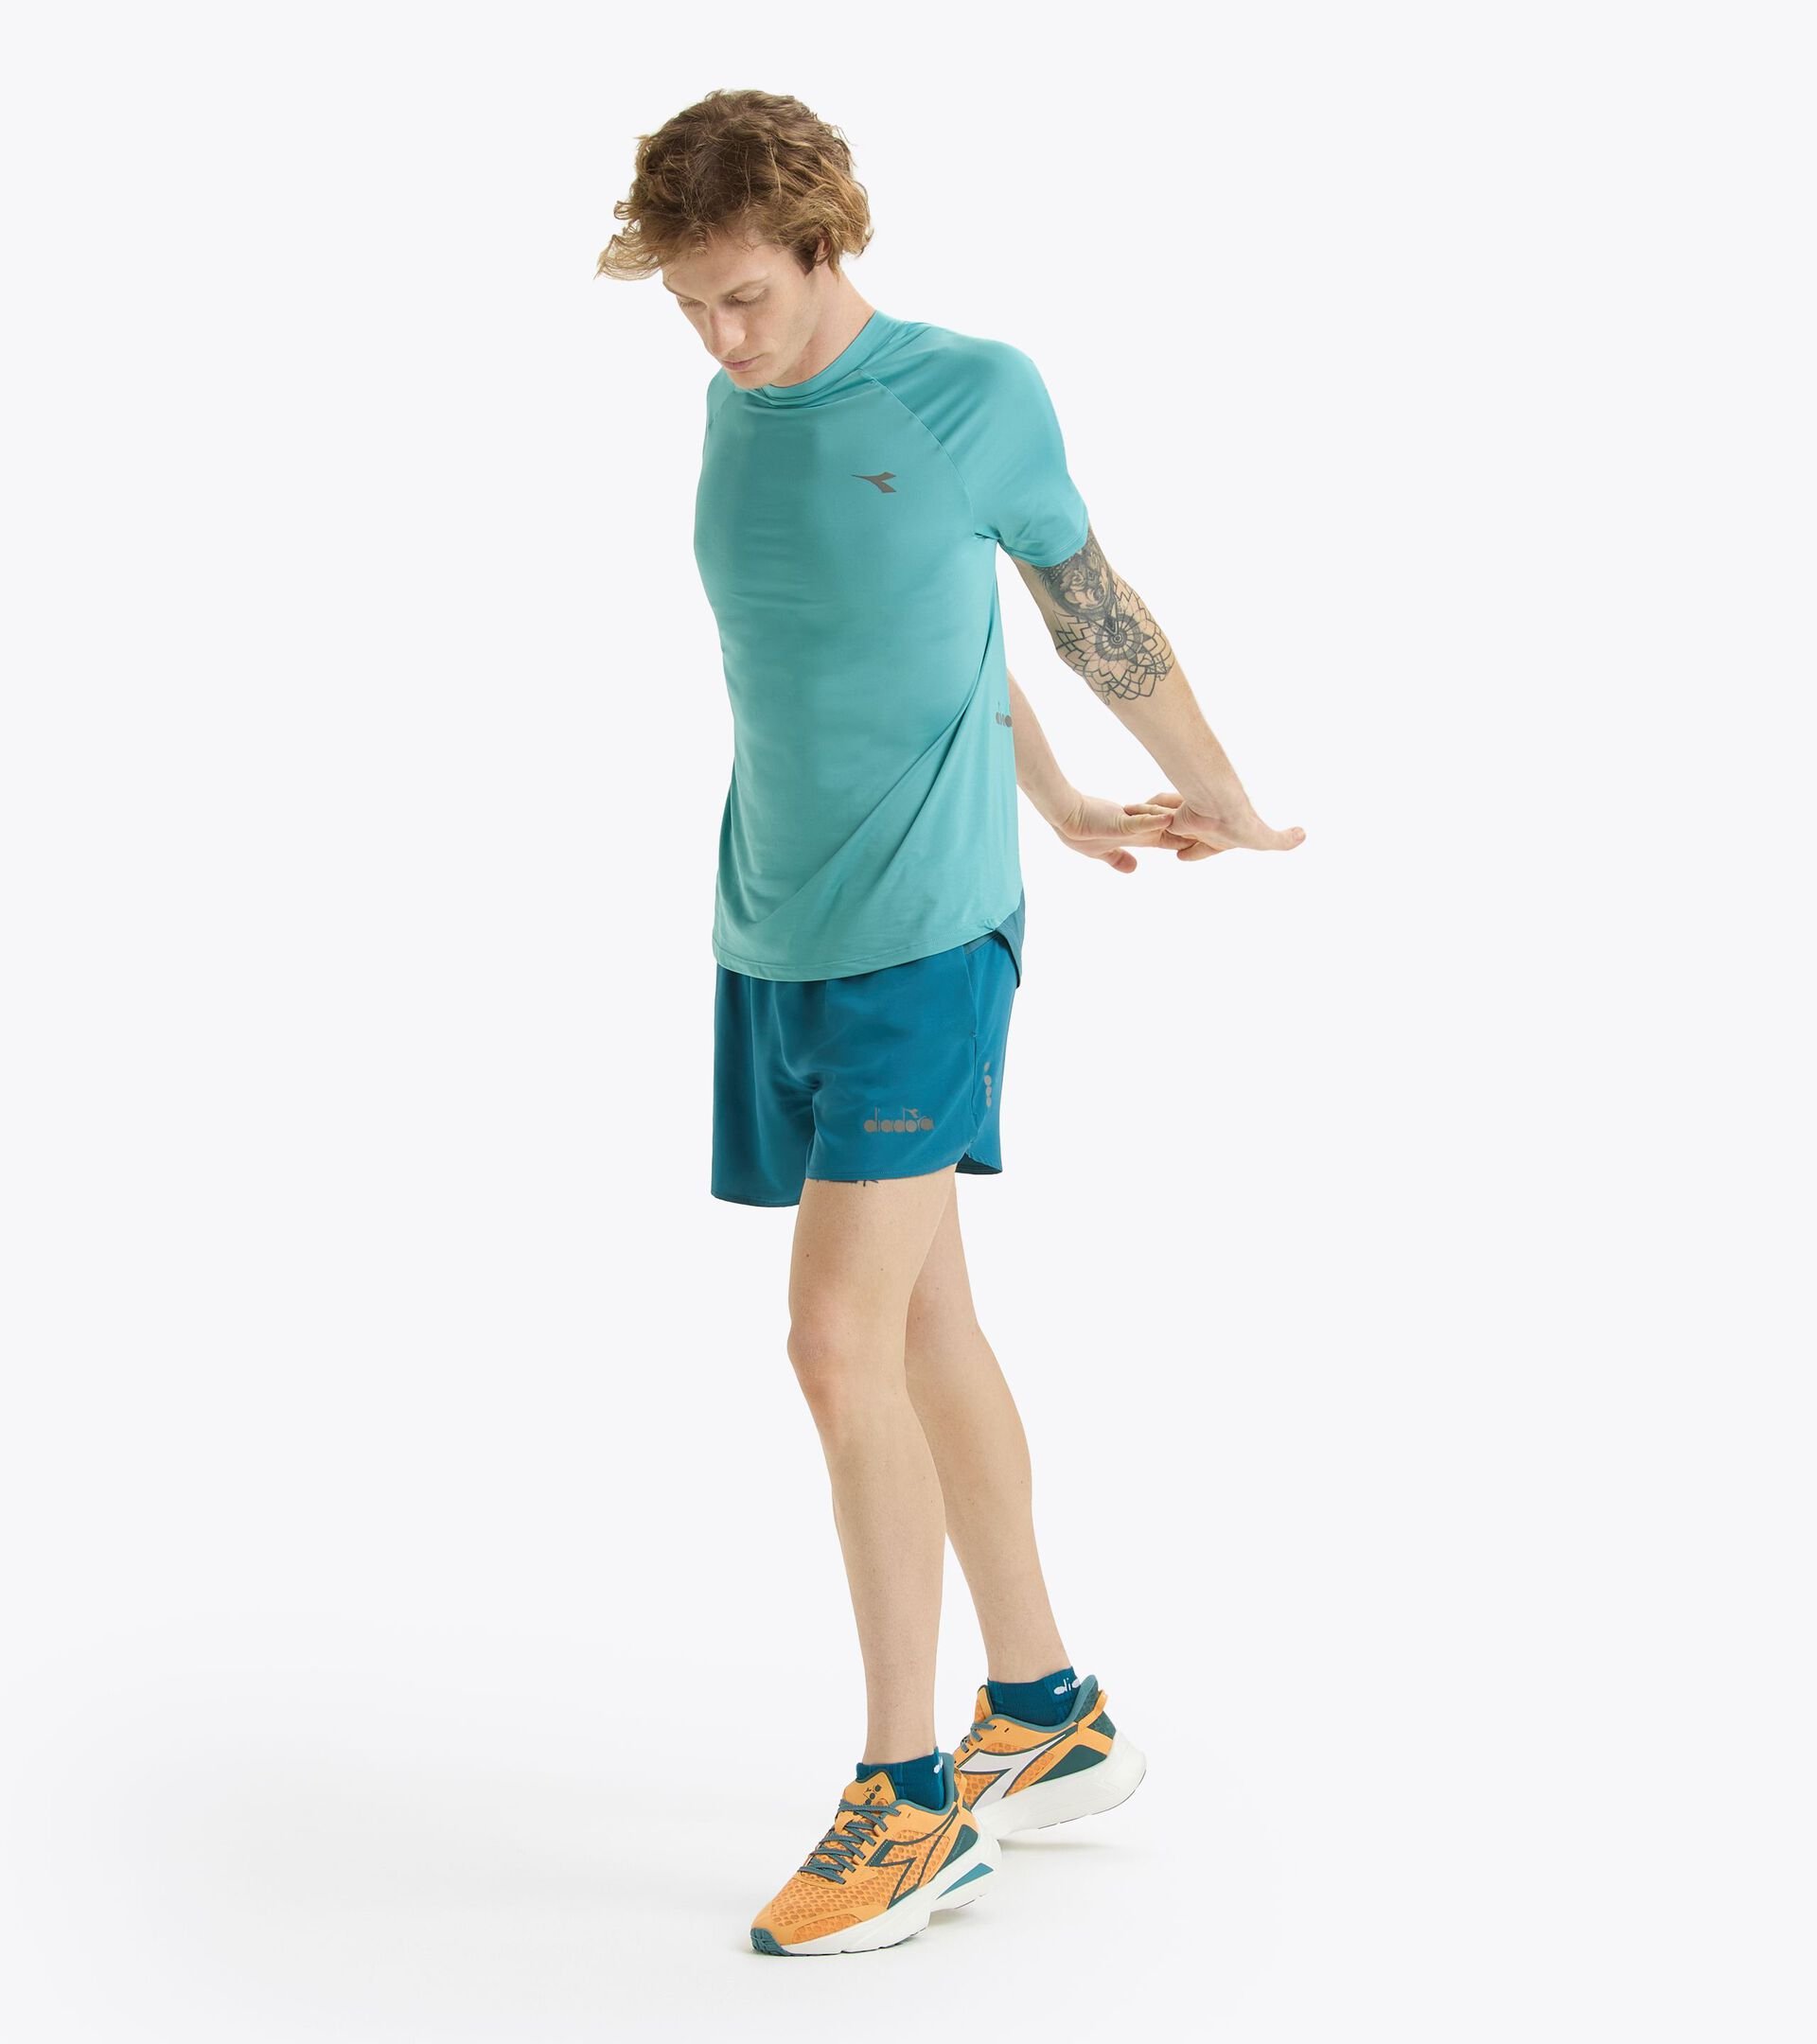 5’’ running shorts - Light fabric - Men’s
 SUPER LIGHT SHORTS 5" COLONIAL BLUE - Diadora